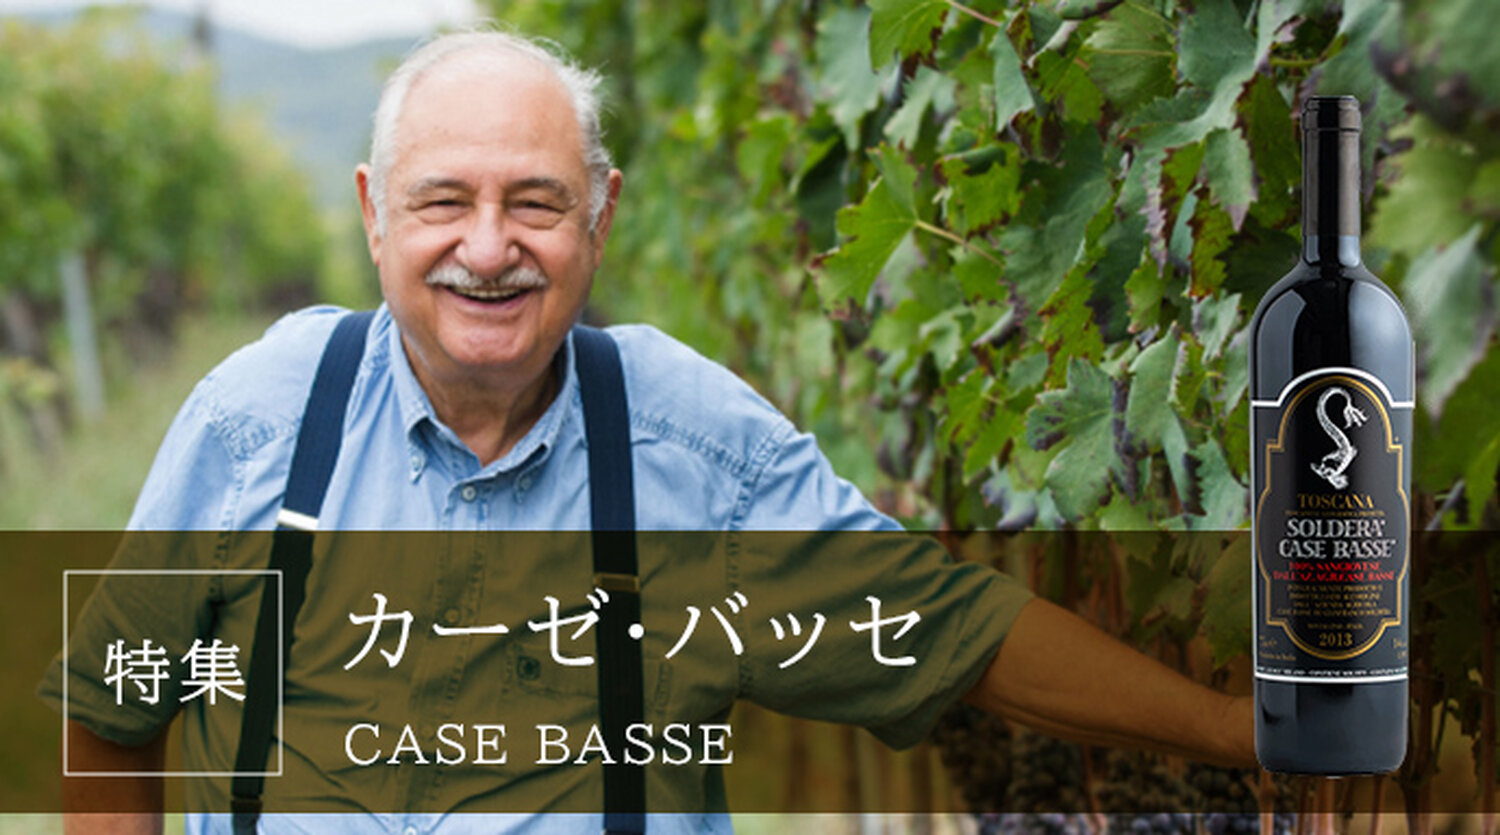 Case Basse カーゼ・バッセ